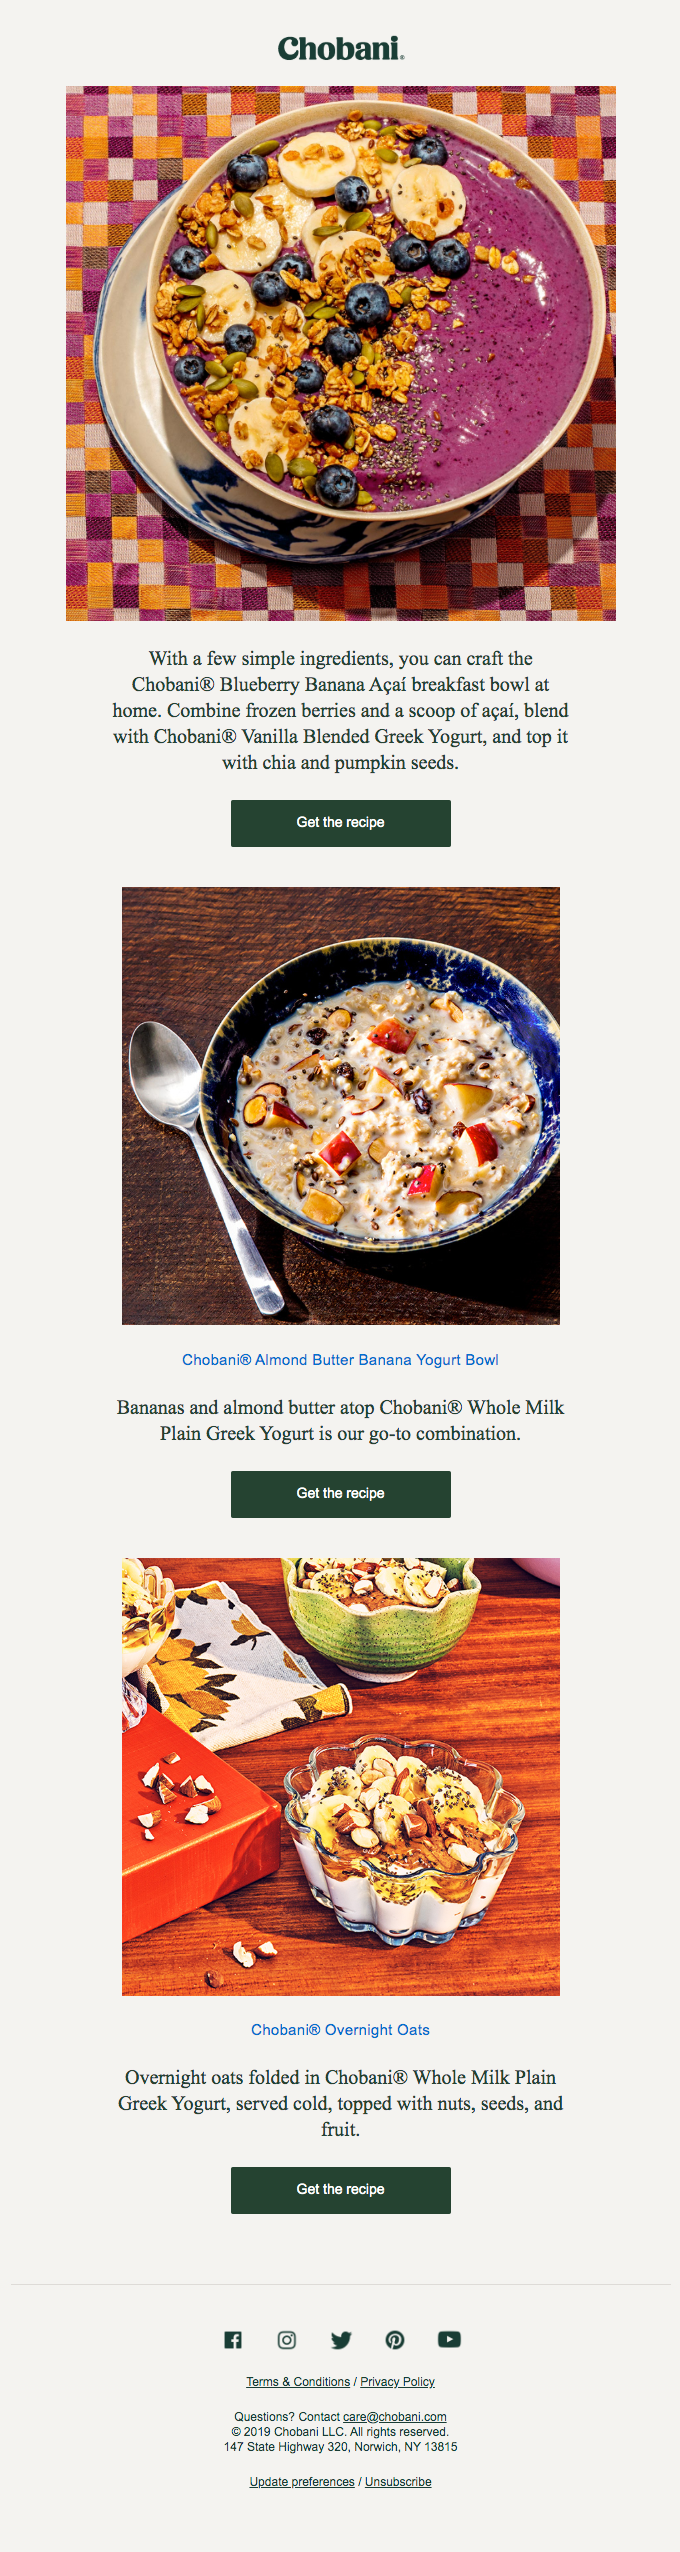 Chobani Breakfast Bowls: How to make